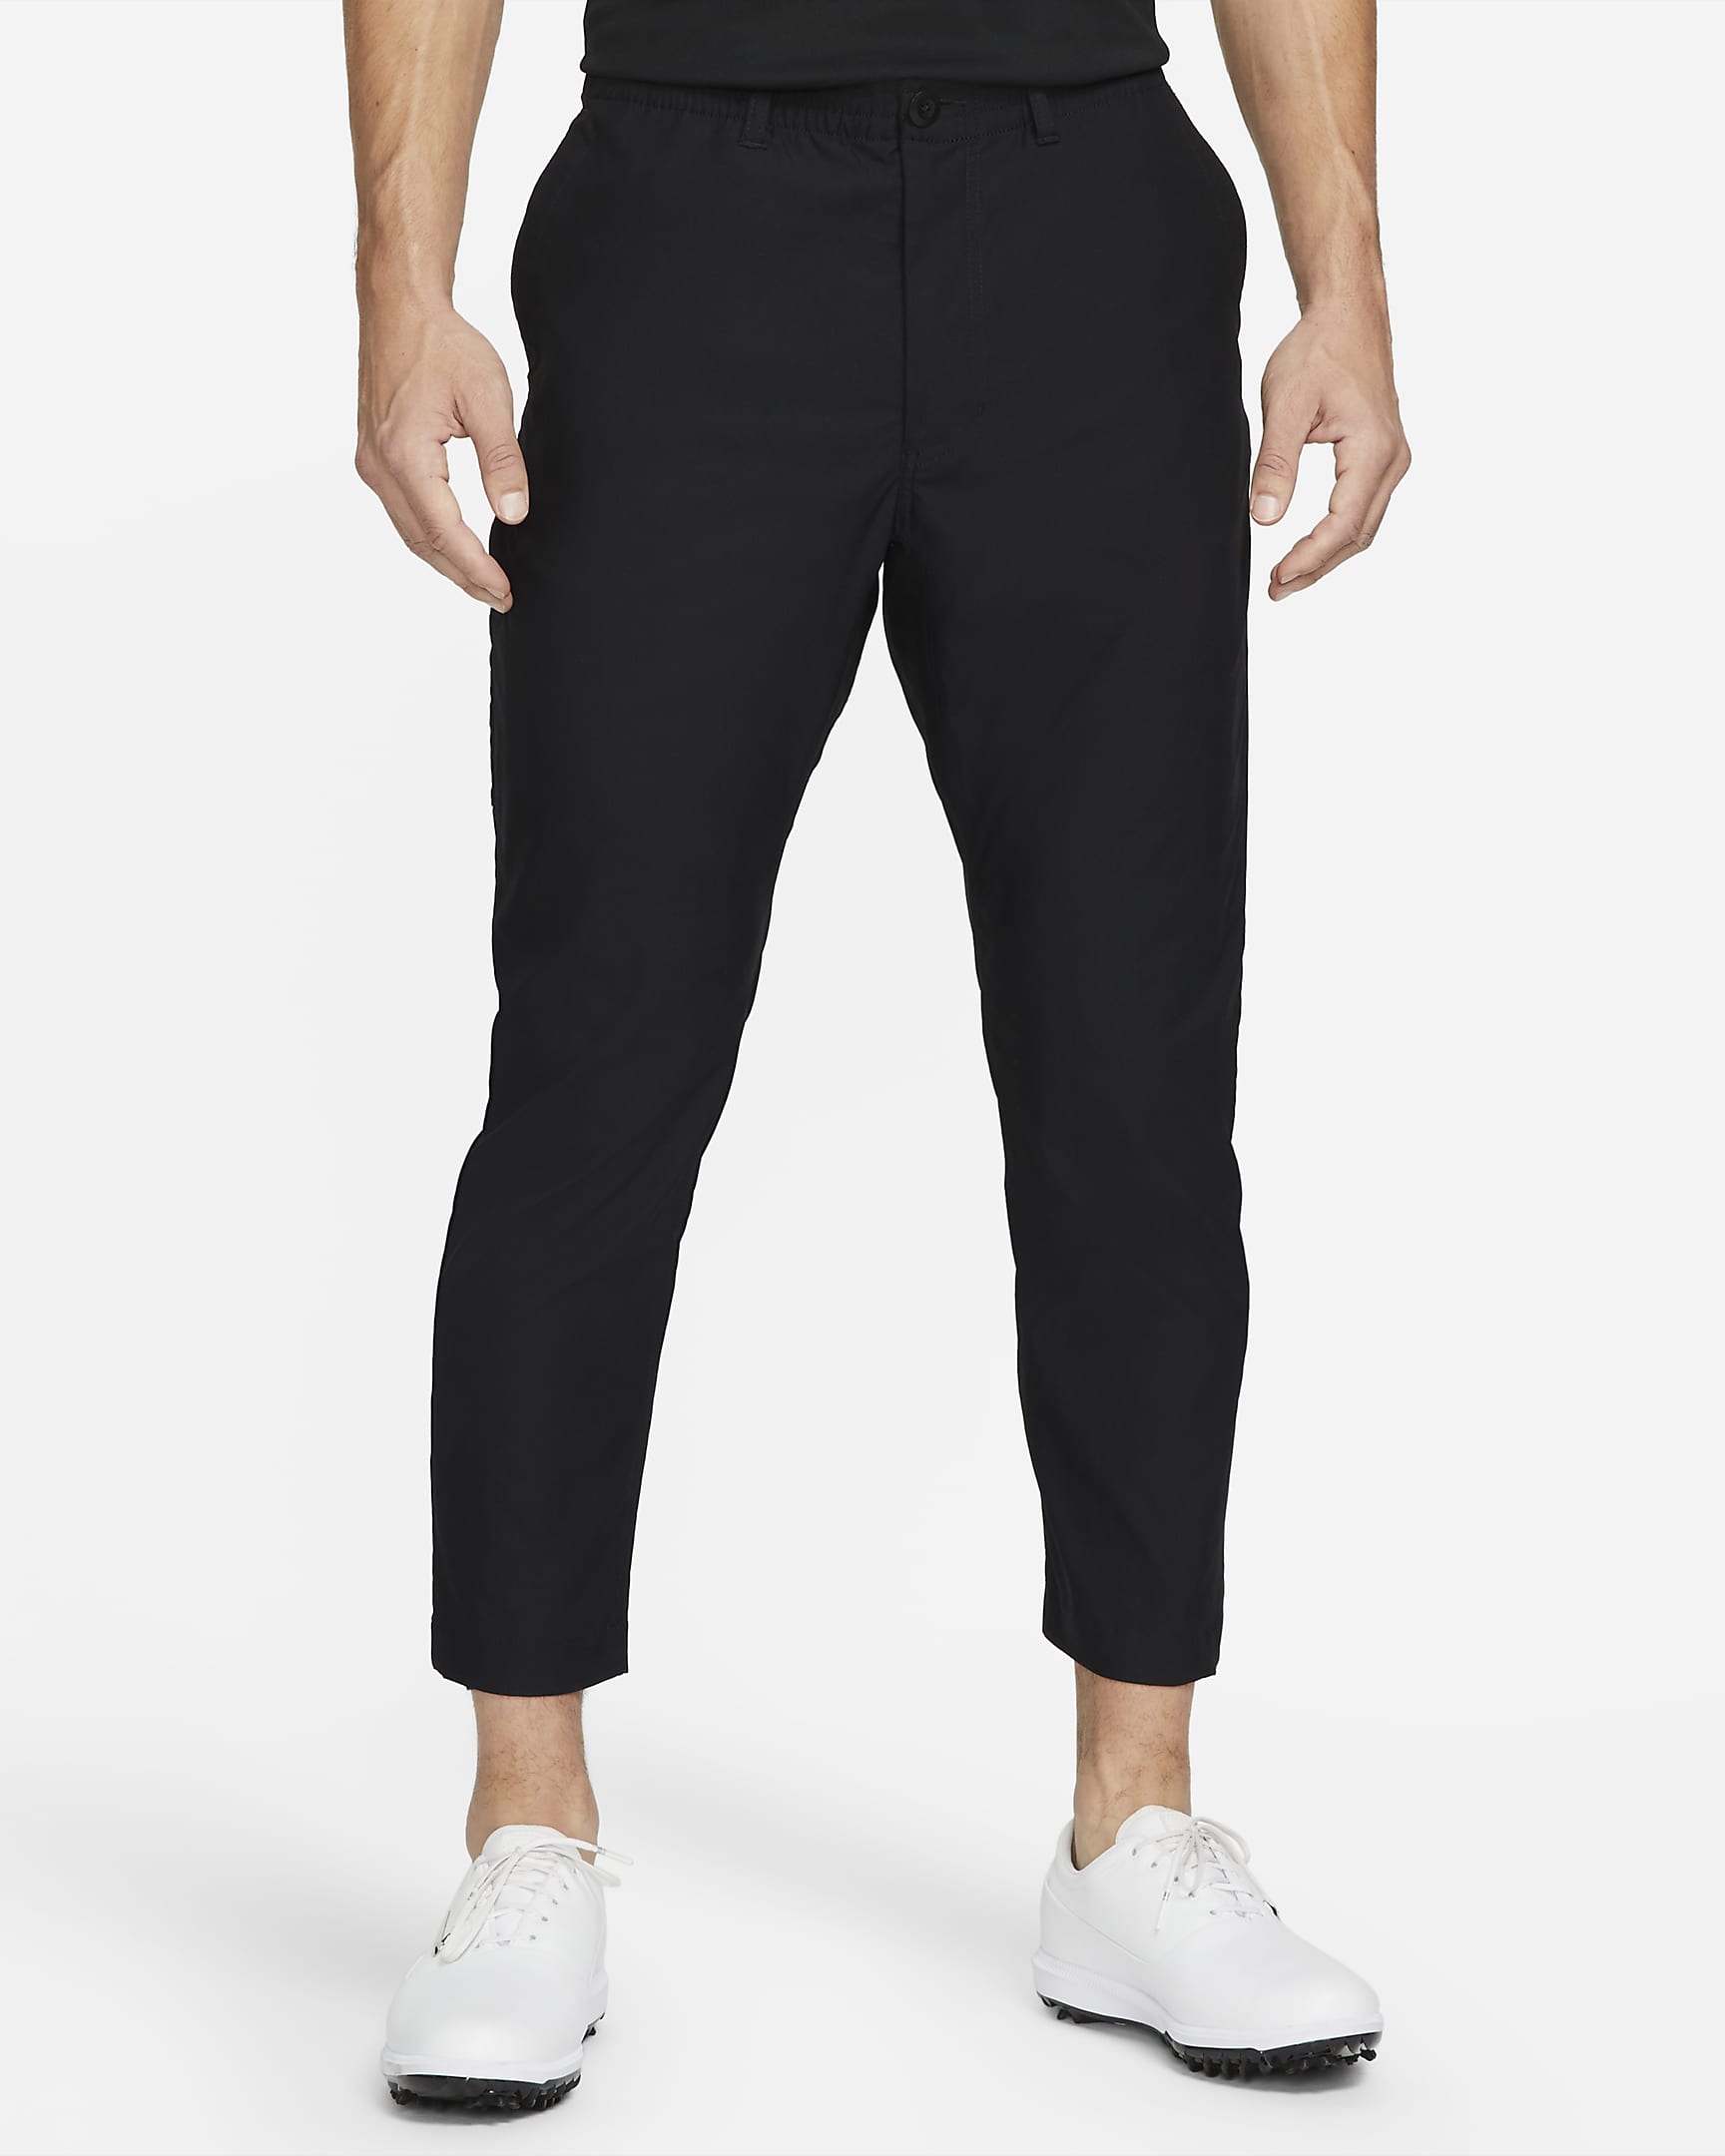 Nike Dri-FIT Men\'s Golf Pants Black